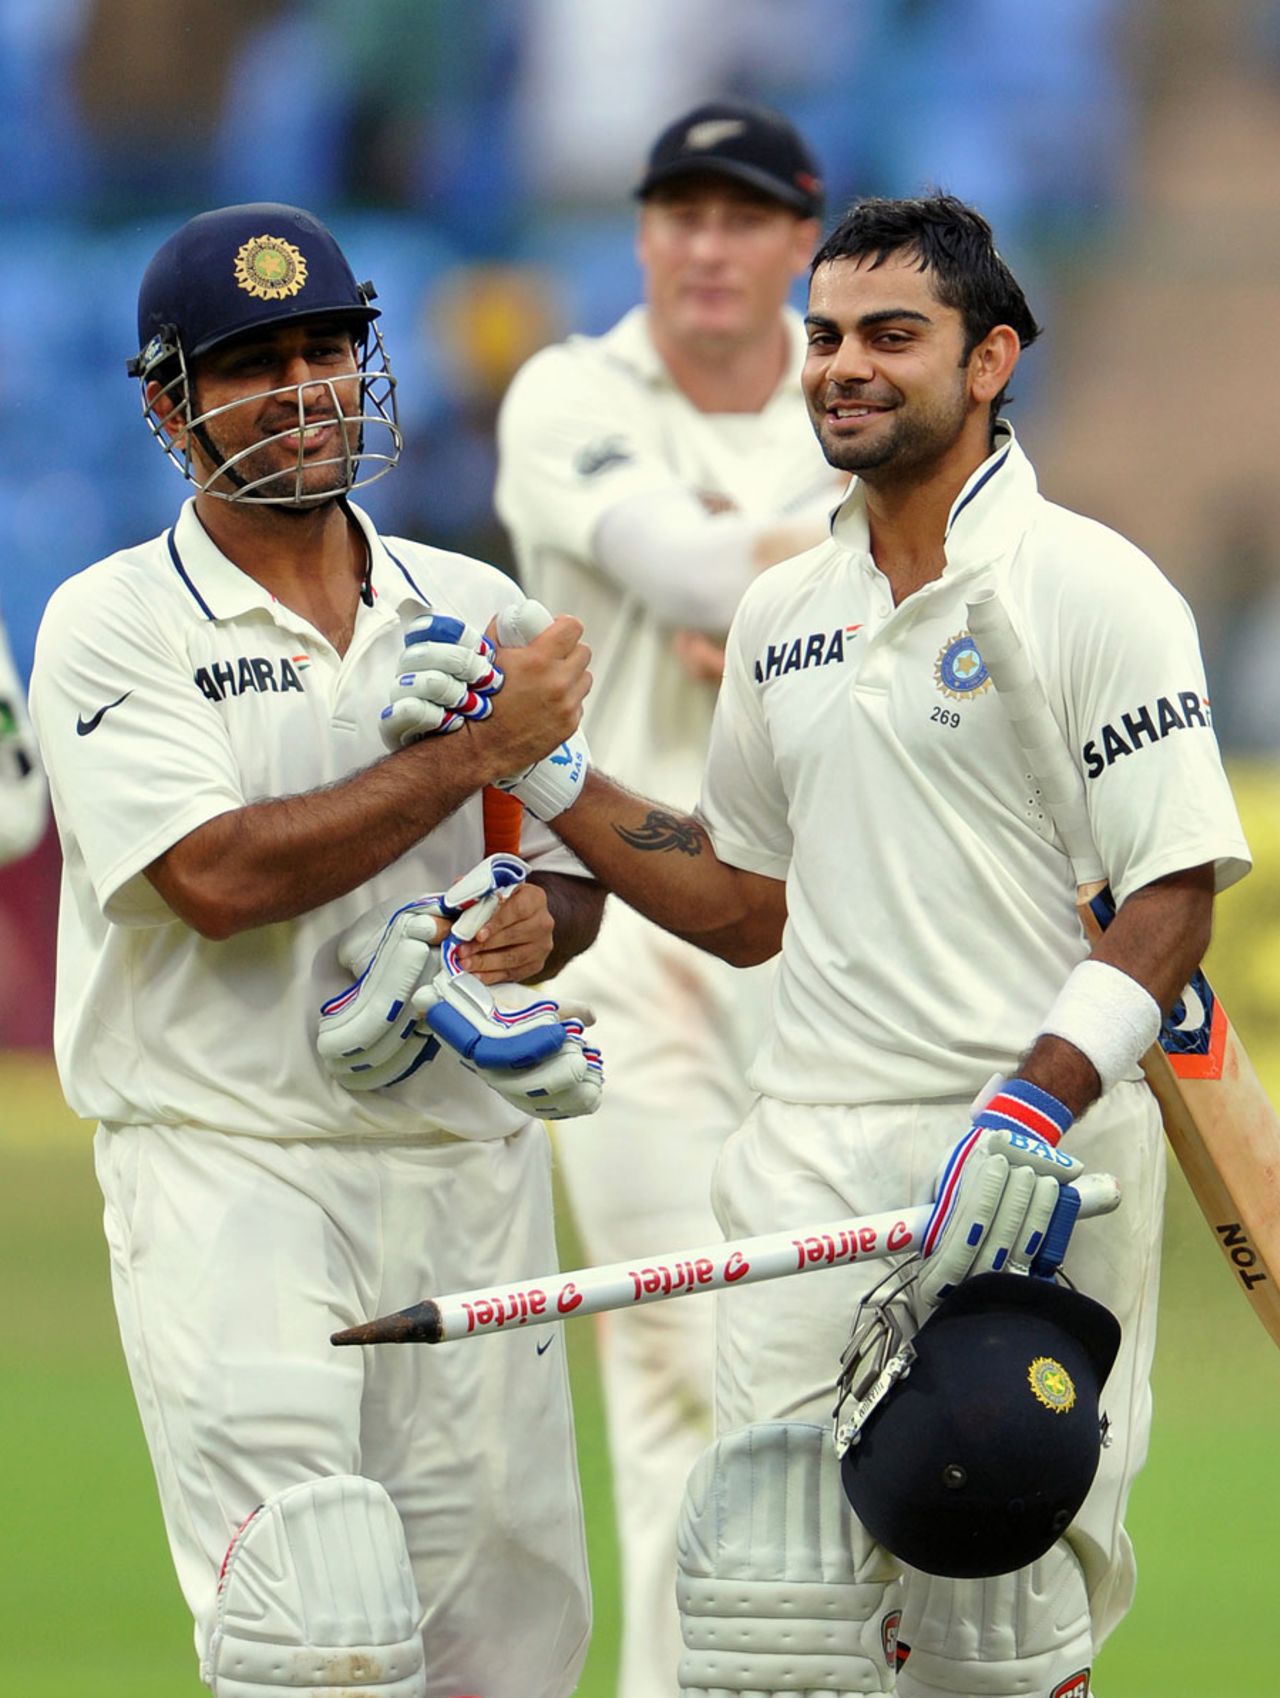 MS Dhoni and Virat Kohli added 96 runs to take India home, India v New Zealand, 2nd Test, Bangalore, 4th day, September 3, 2012